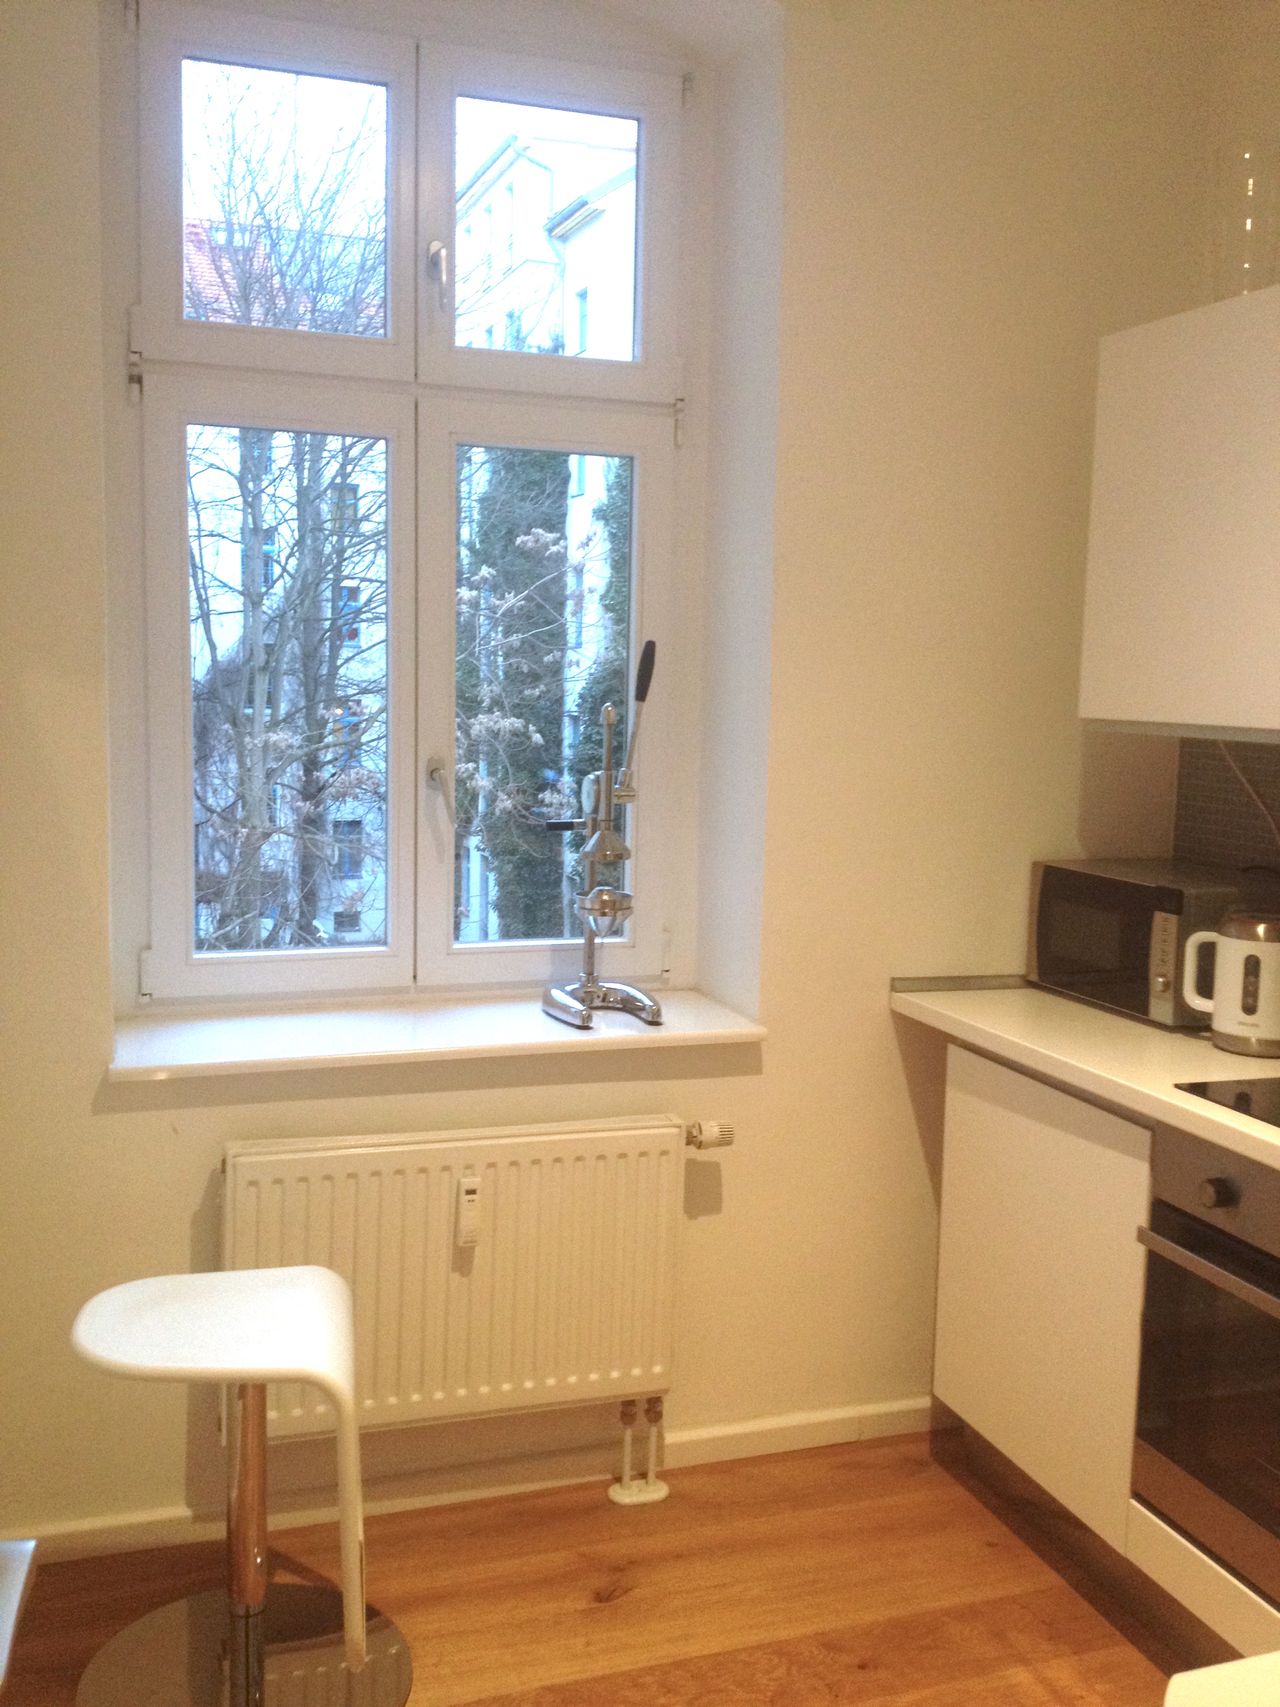 Bright 2-room apartment in Mitte/Prenzlauer Berg